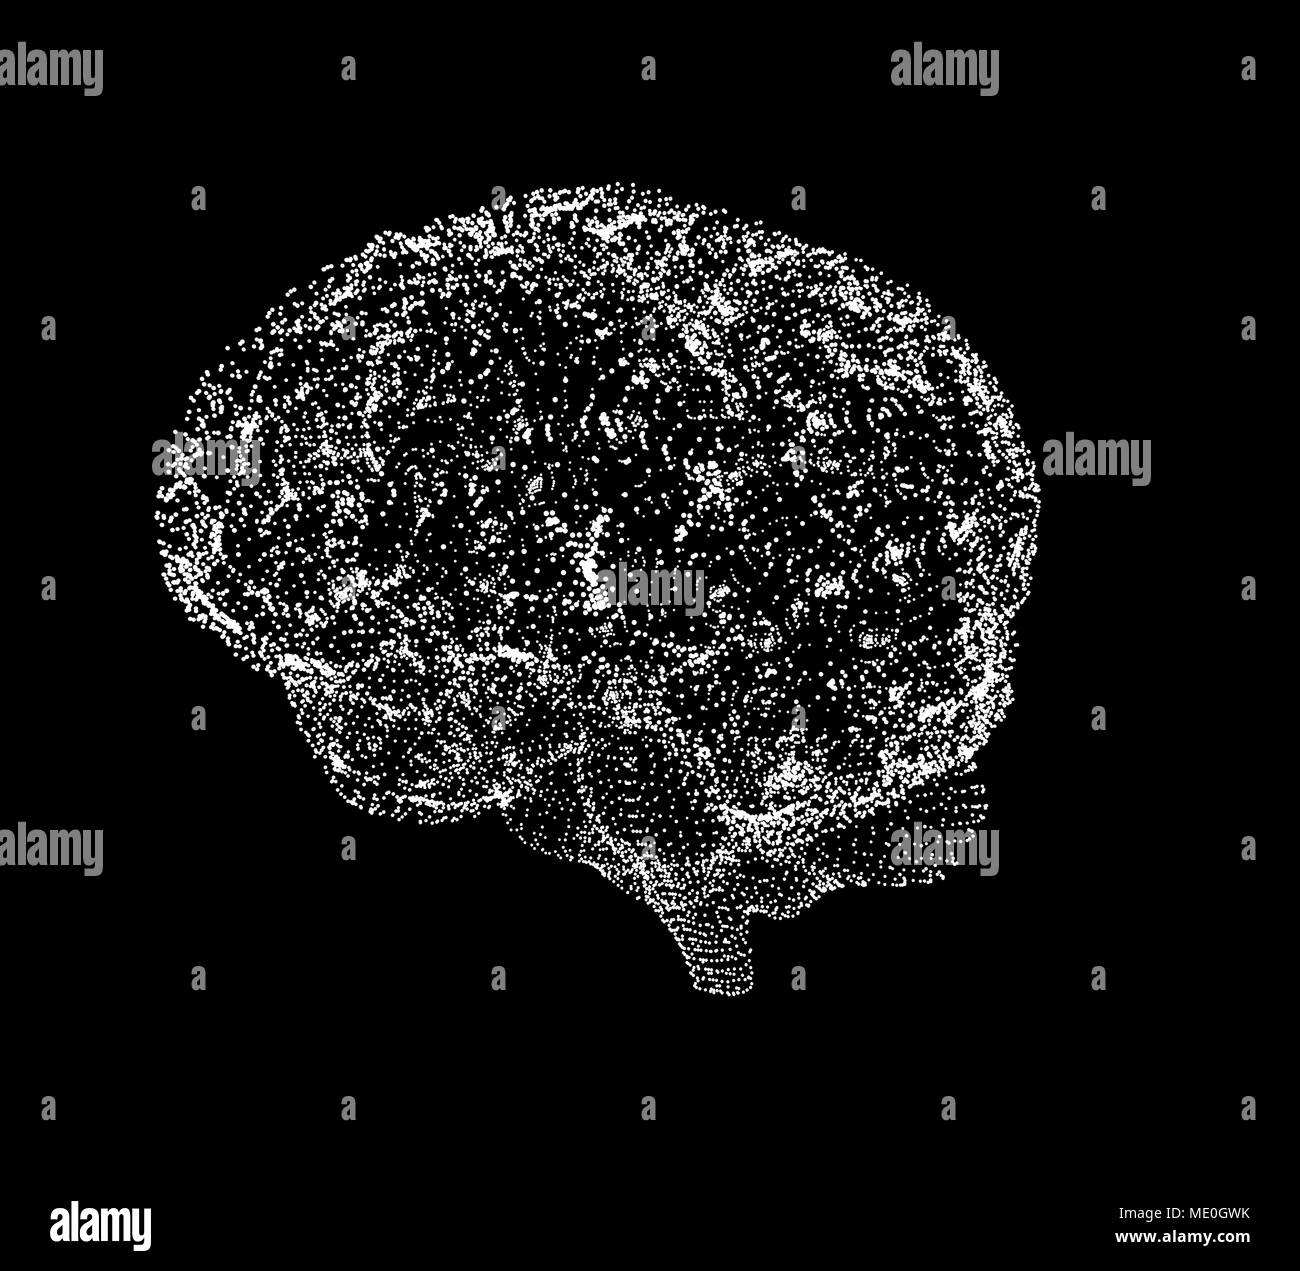 Human brain, conceptual computer illustration. Stock Photo